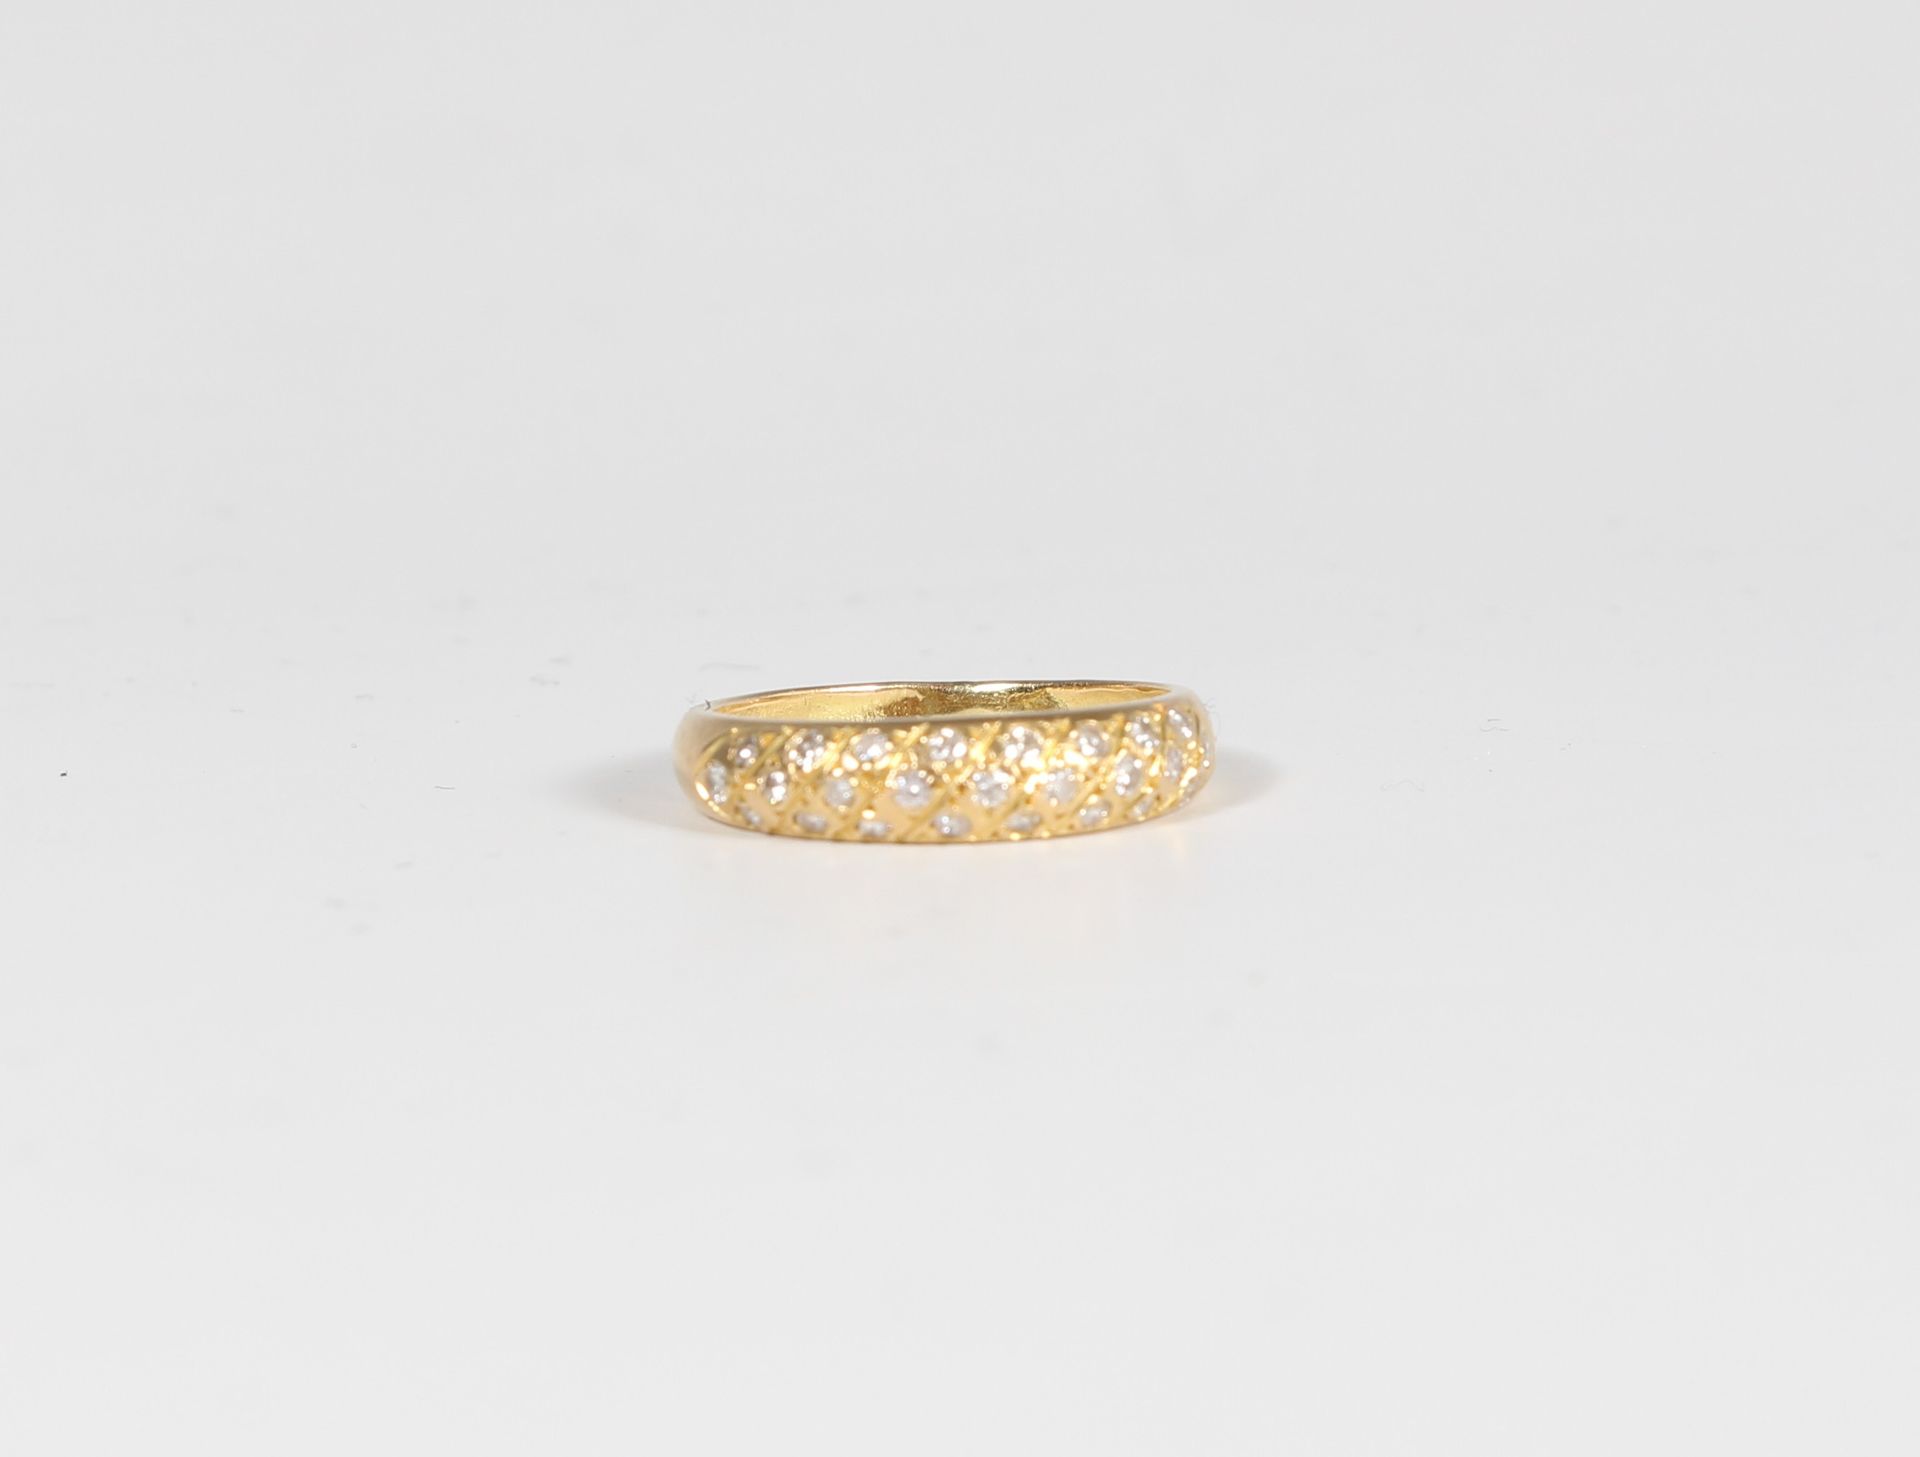 Null 750/1000è黄金戒指，镶有钻石。重量: 2,53 g

TDD: 51